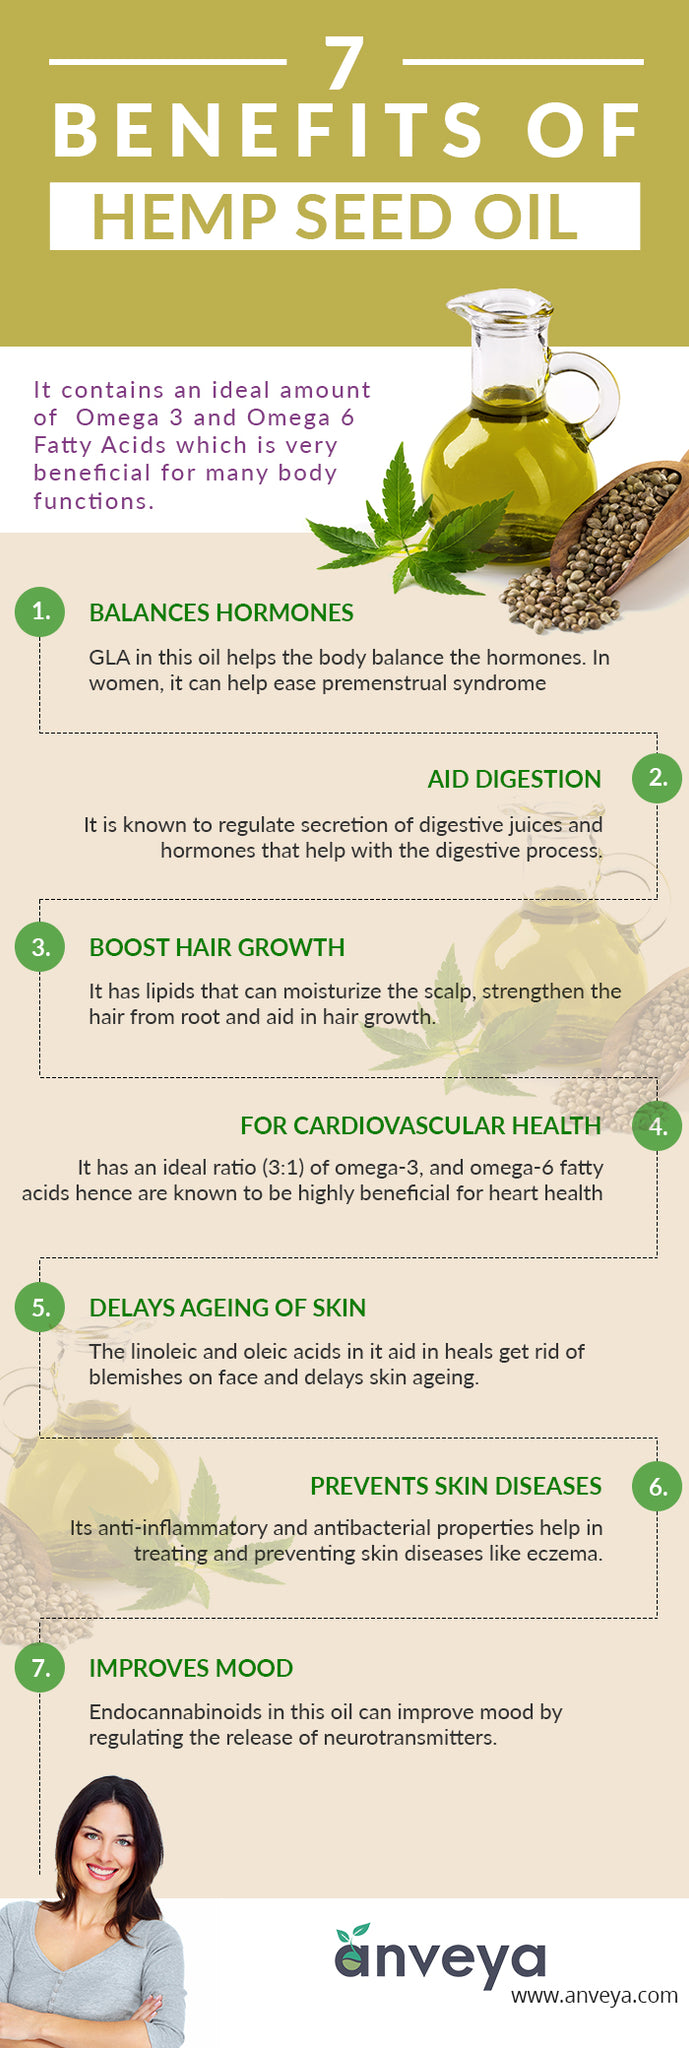 7 Benefits of Hemp Seed Oil